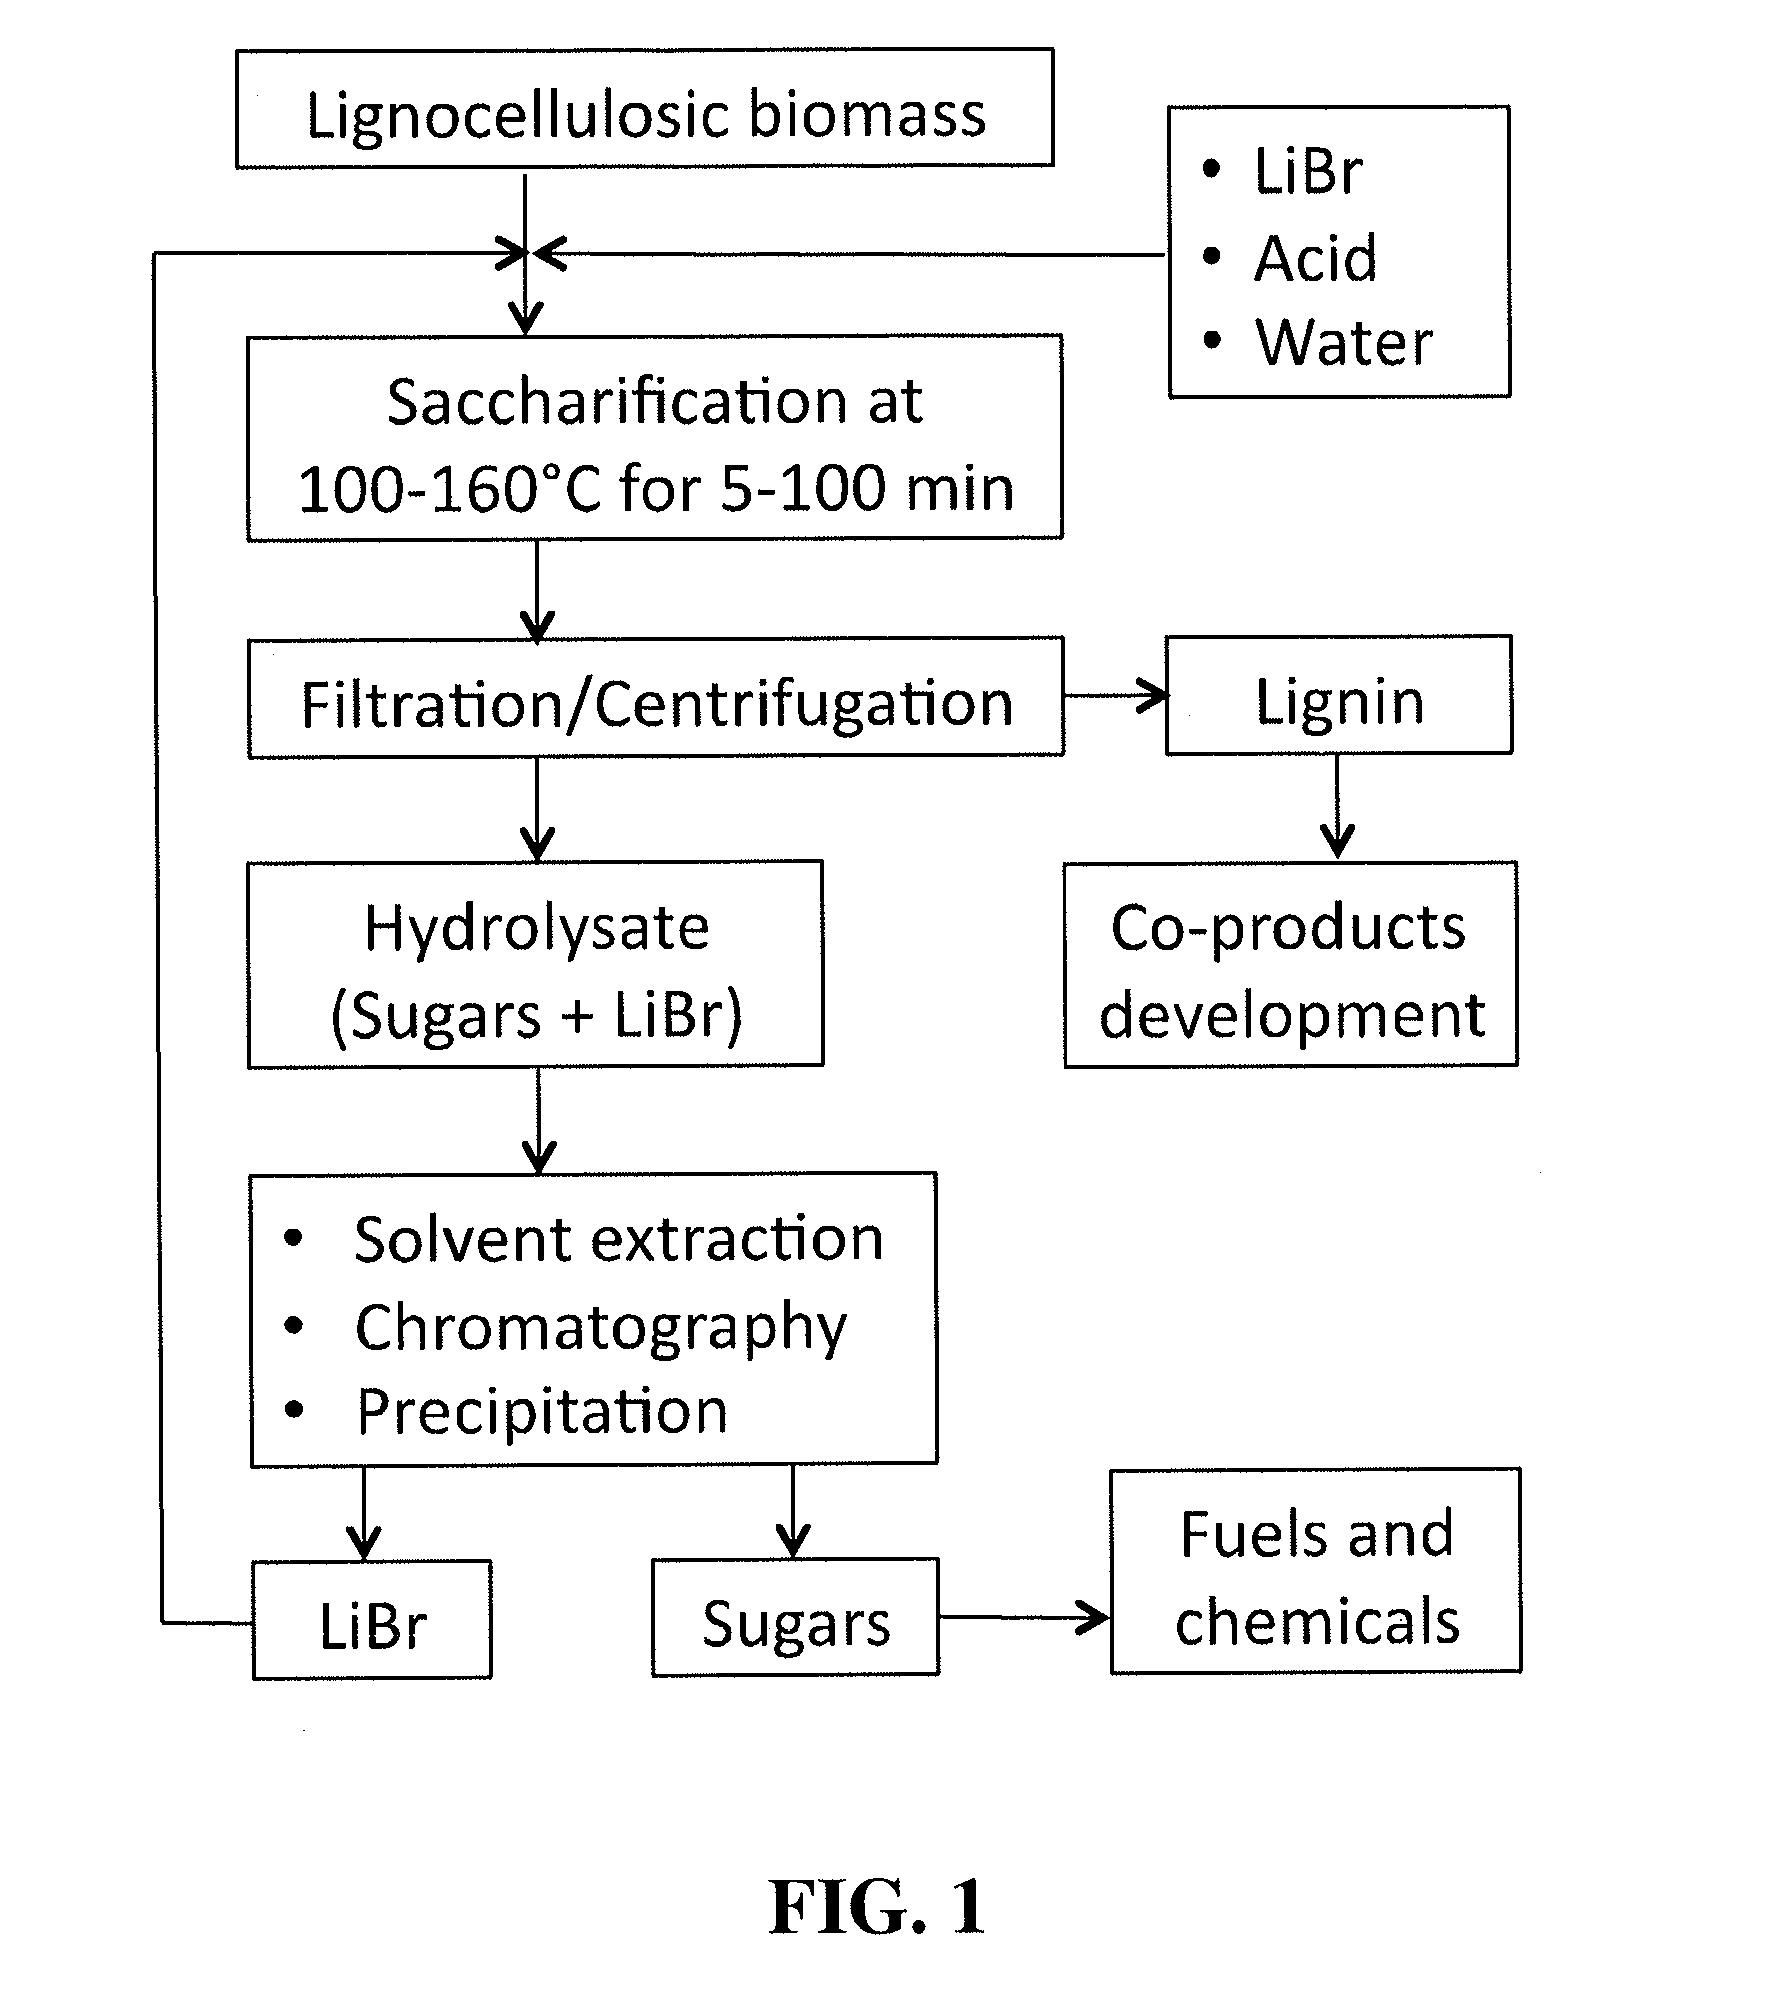 Saccharification of lignocellulosic biomass